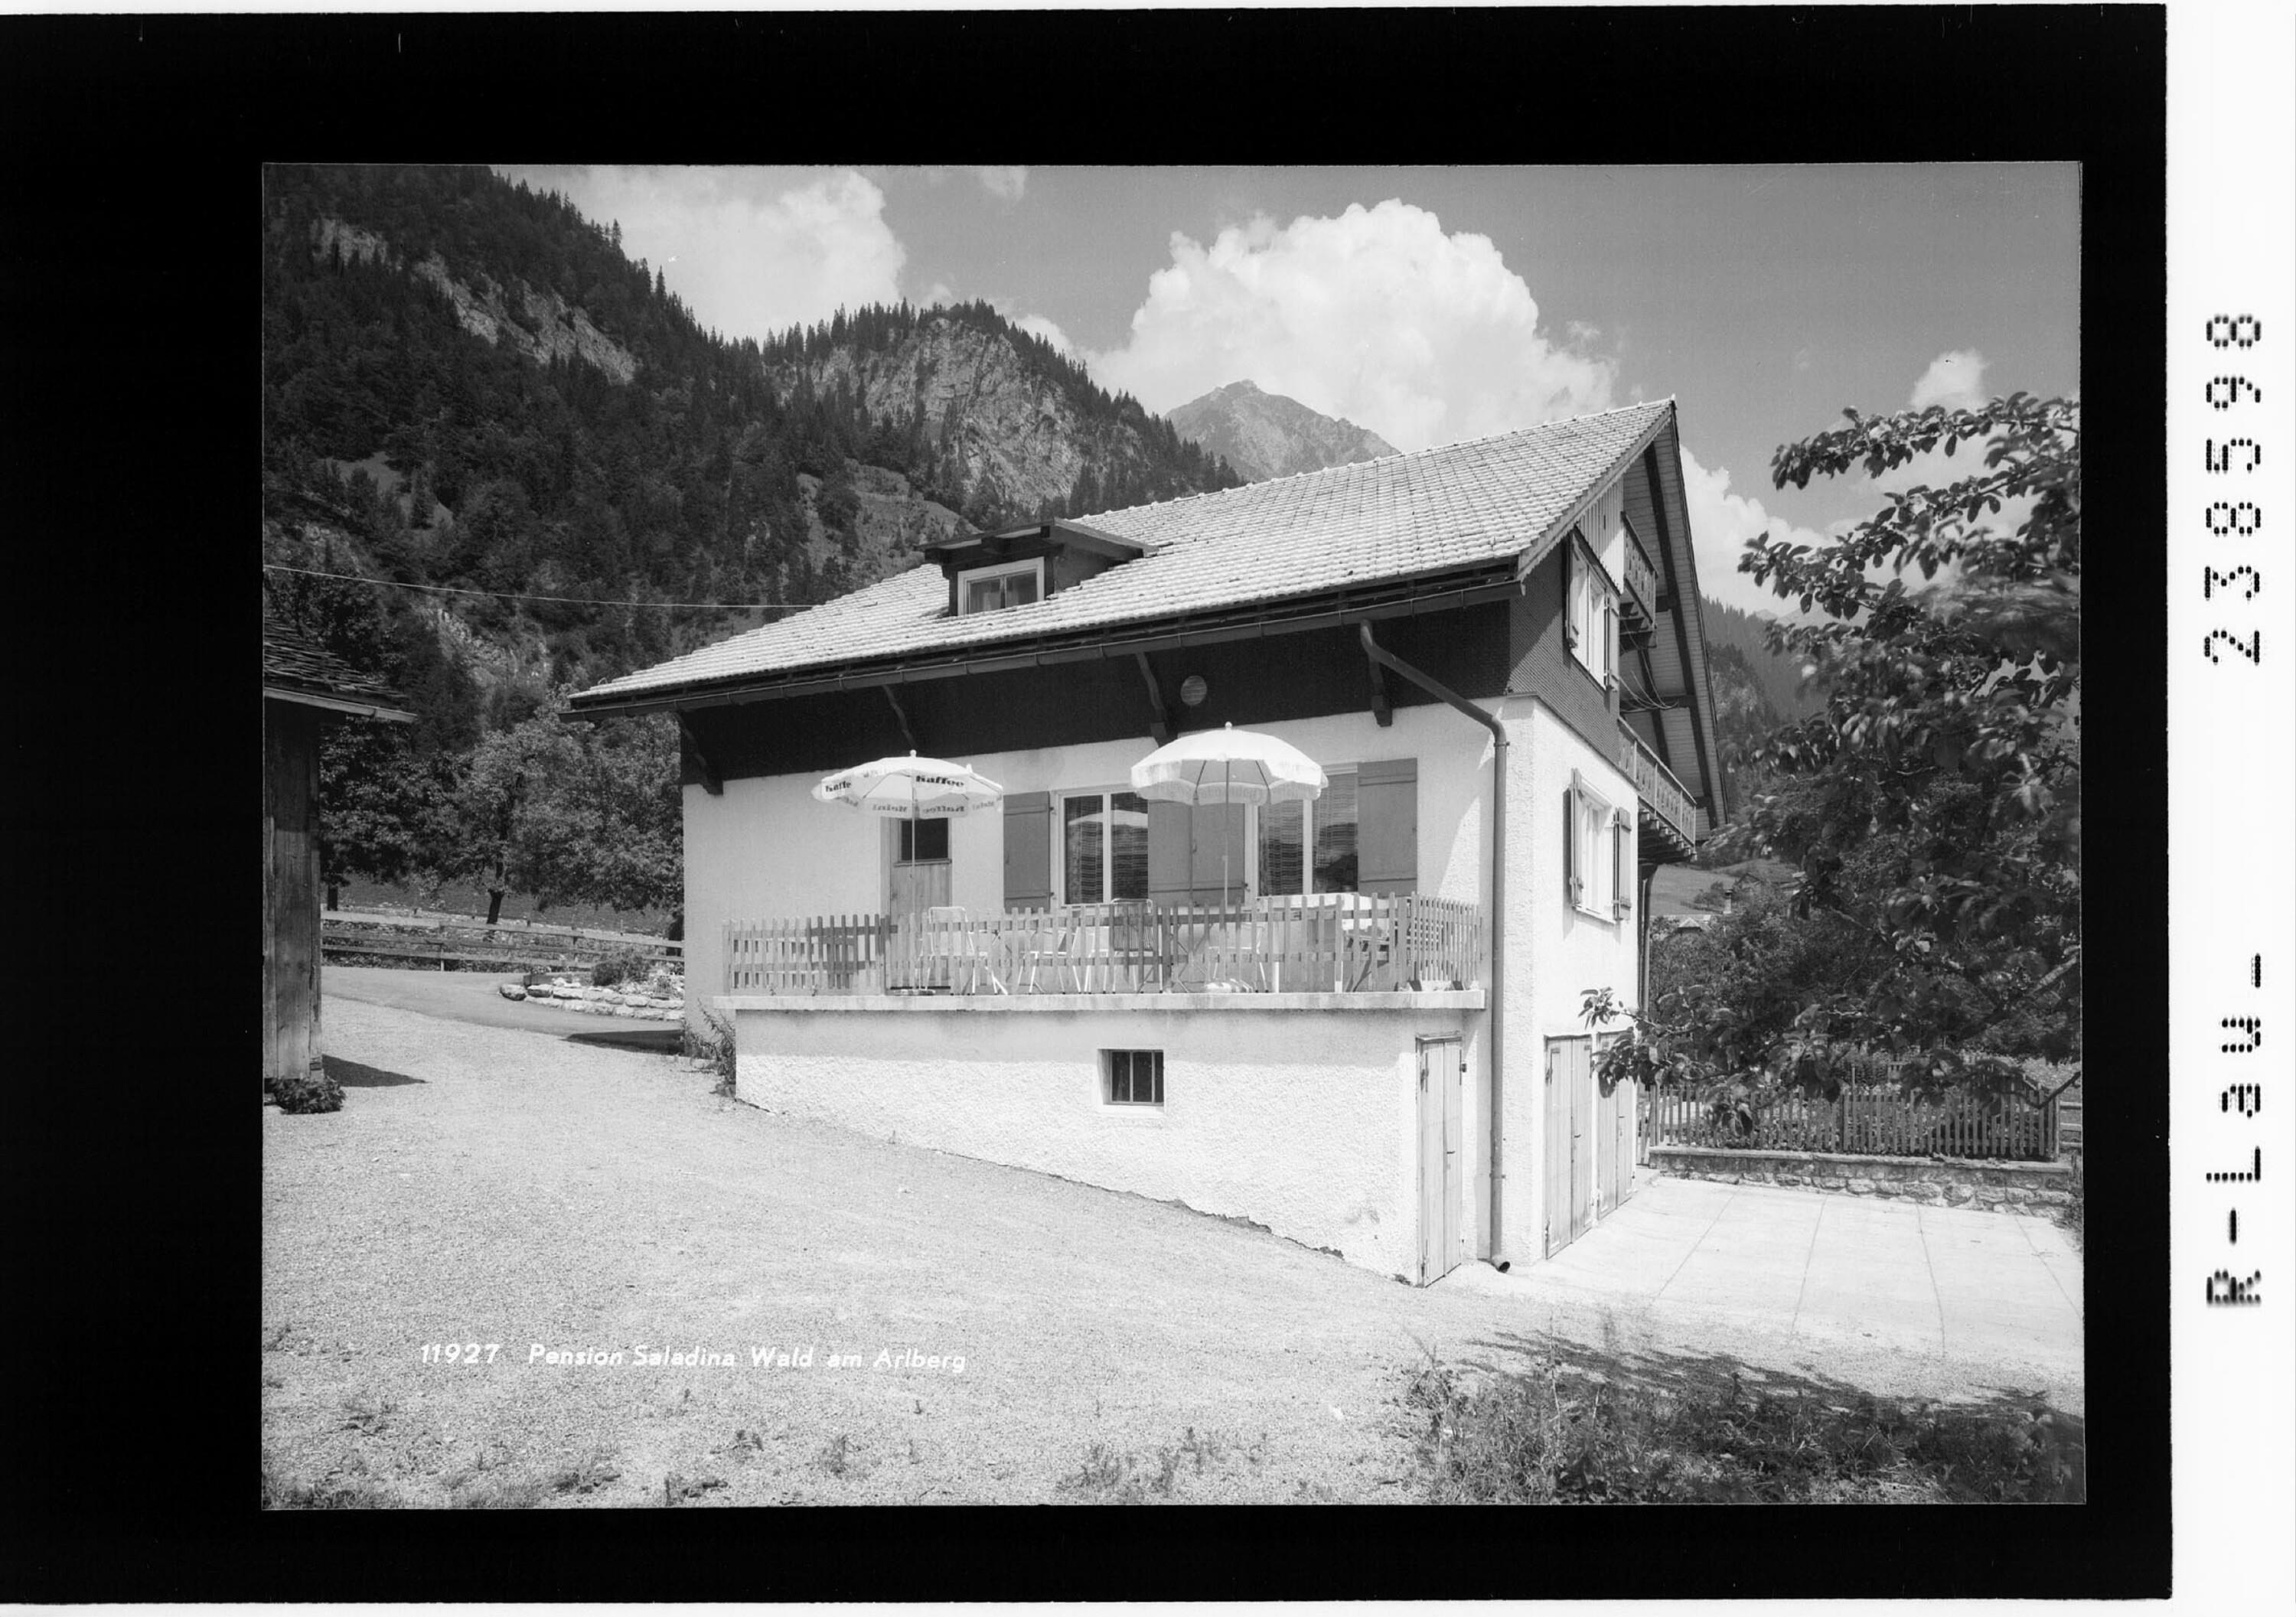 Pension Saladina / Wald am Arlberg></div>


    <hr>
    <div class=